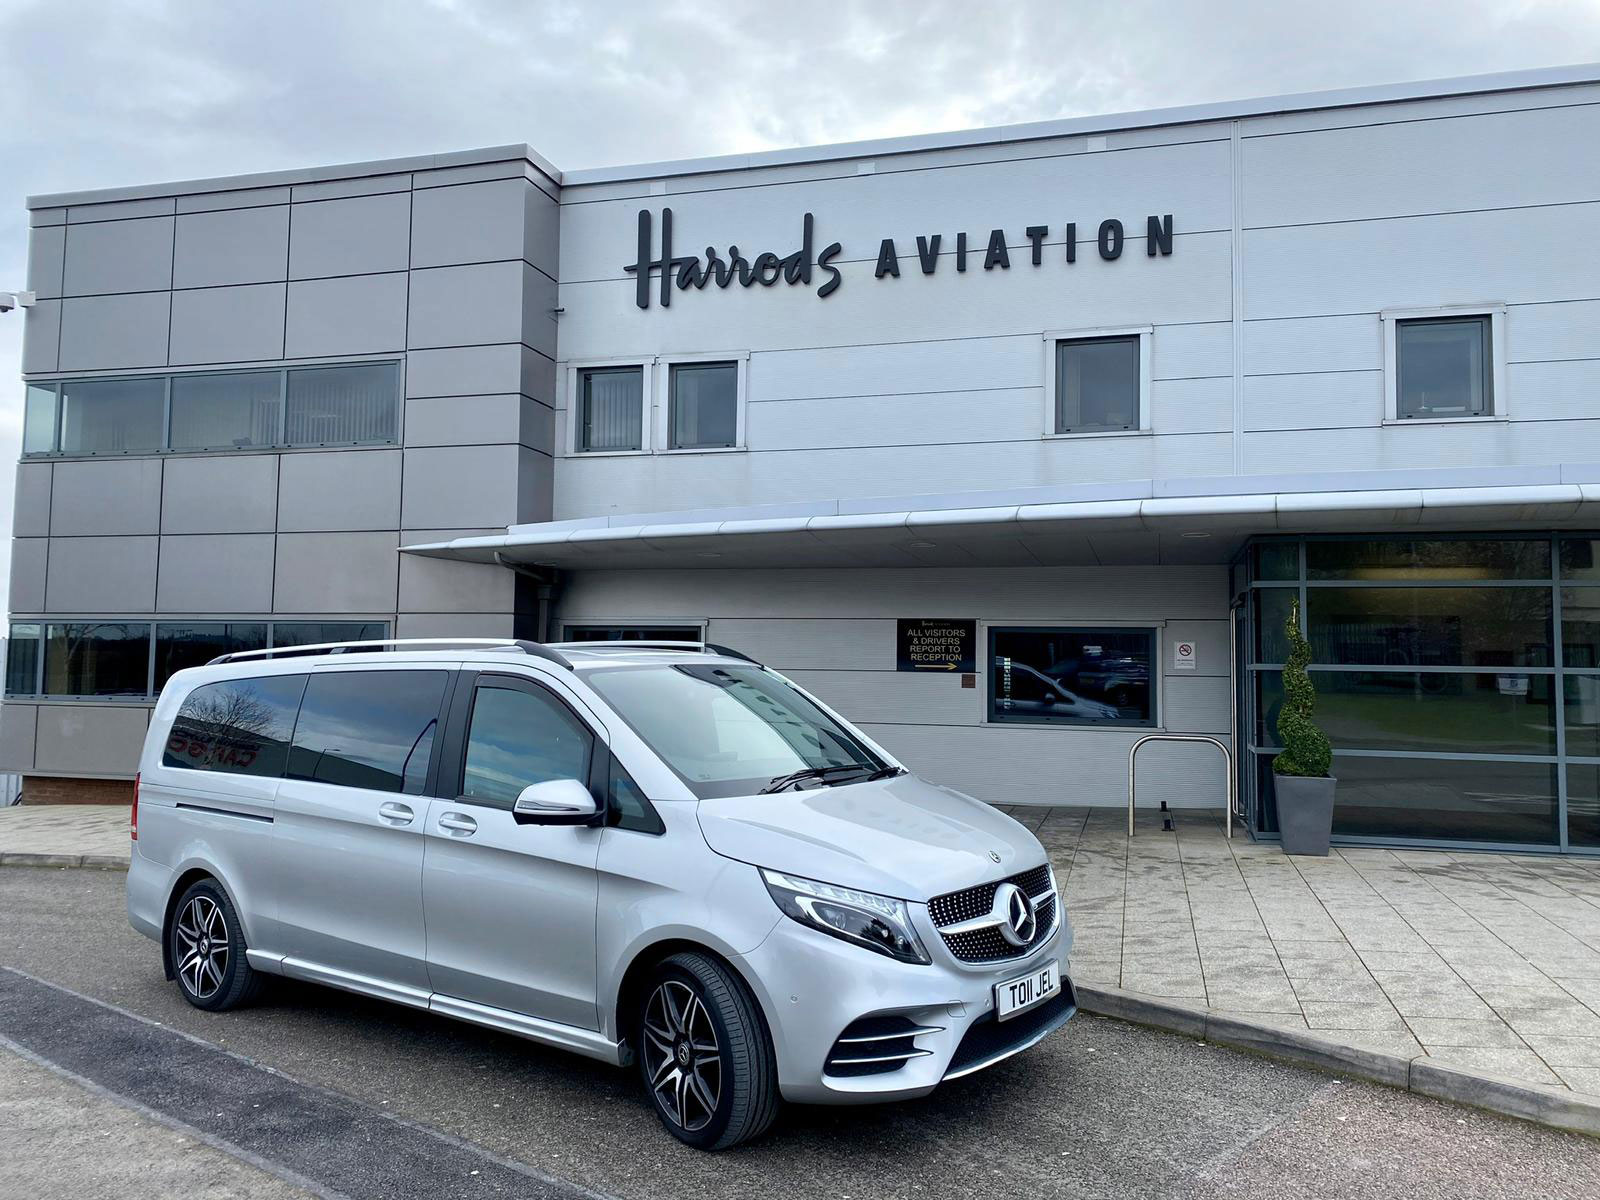 Harrods Aviation Private Jet Centre Luton Airport